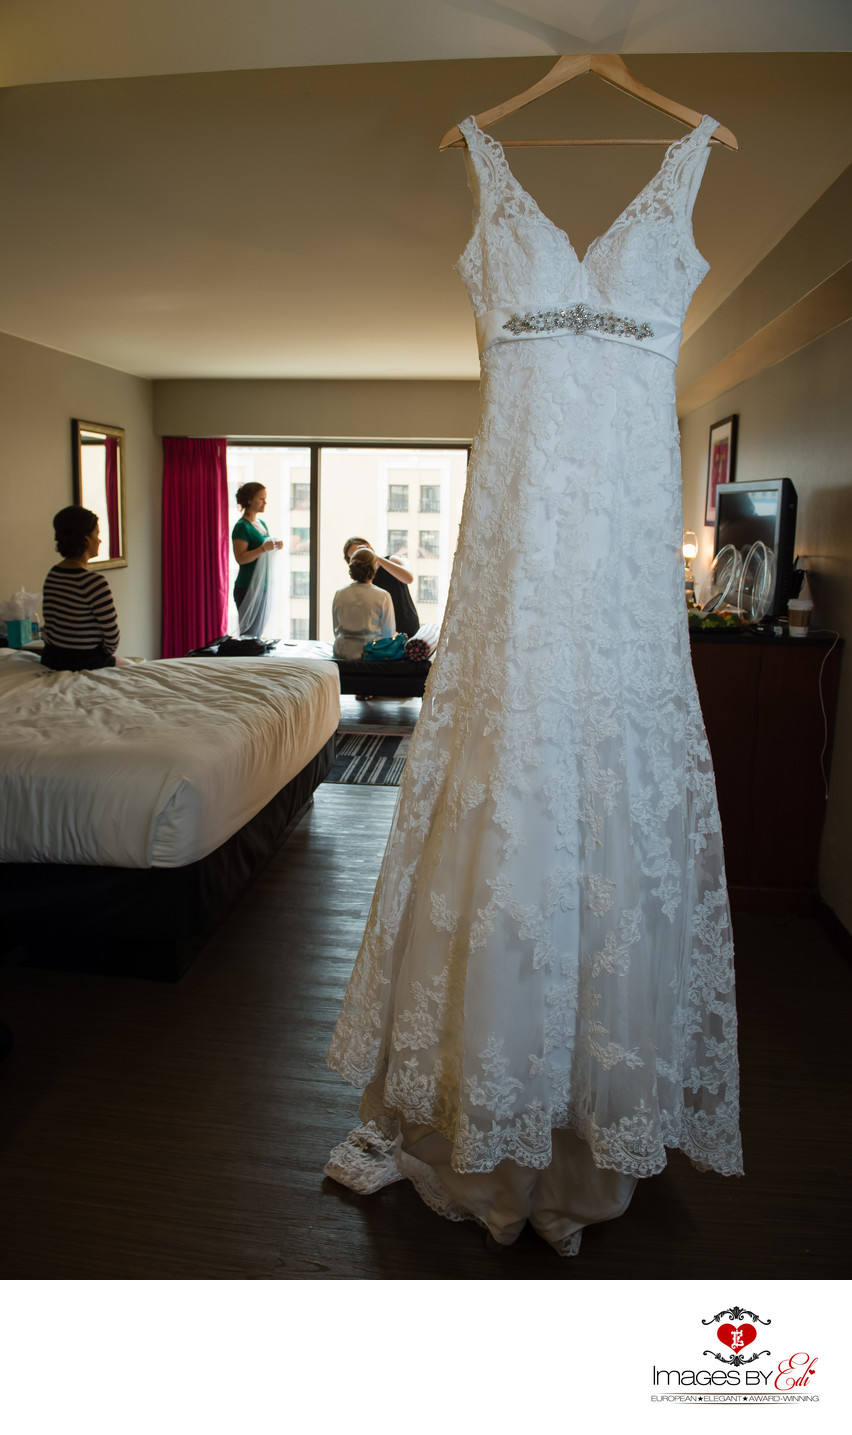 Bride gets ready at Flamingo hotel before Cili Bali Hai wedding